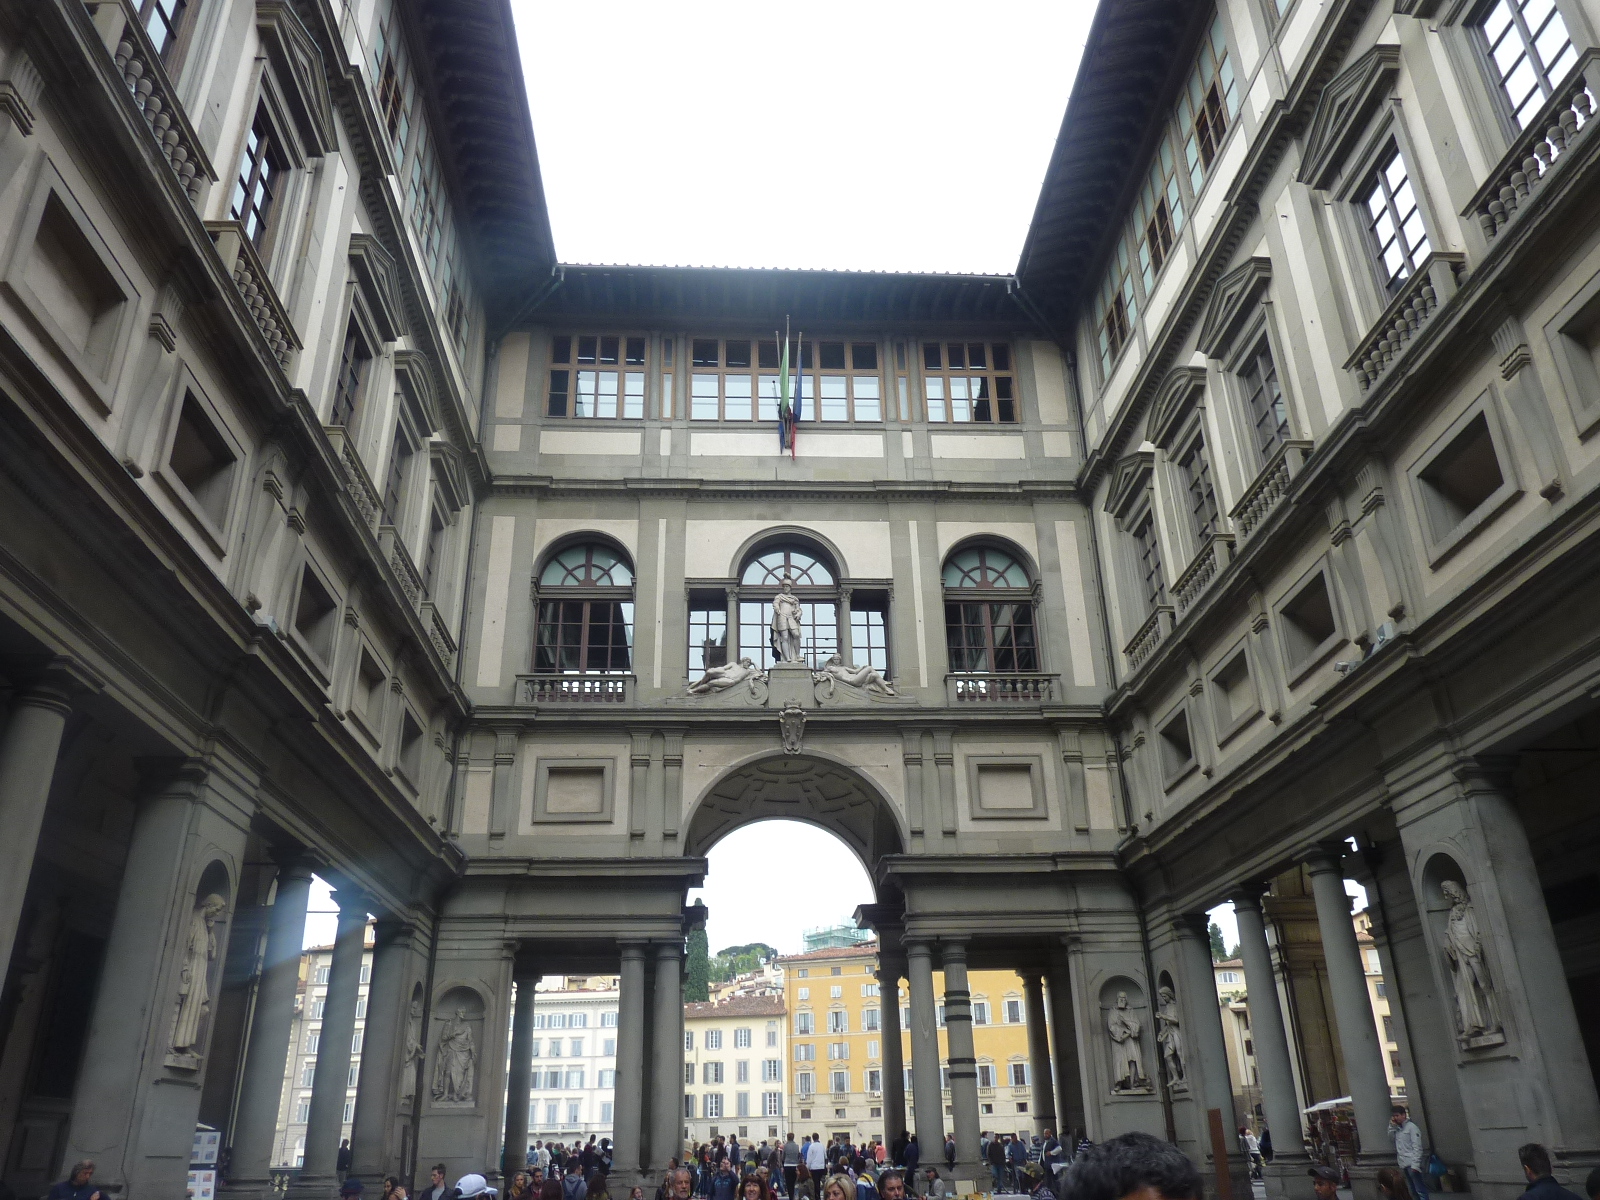 Imagem Uffizi. Vista externa da Galleria degli Uffizi